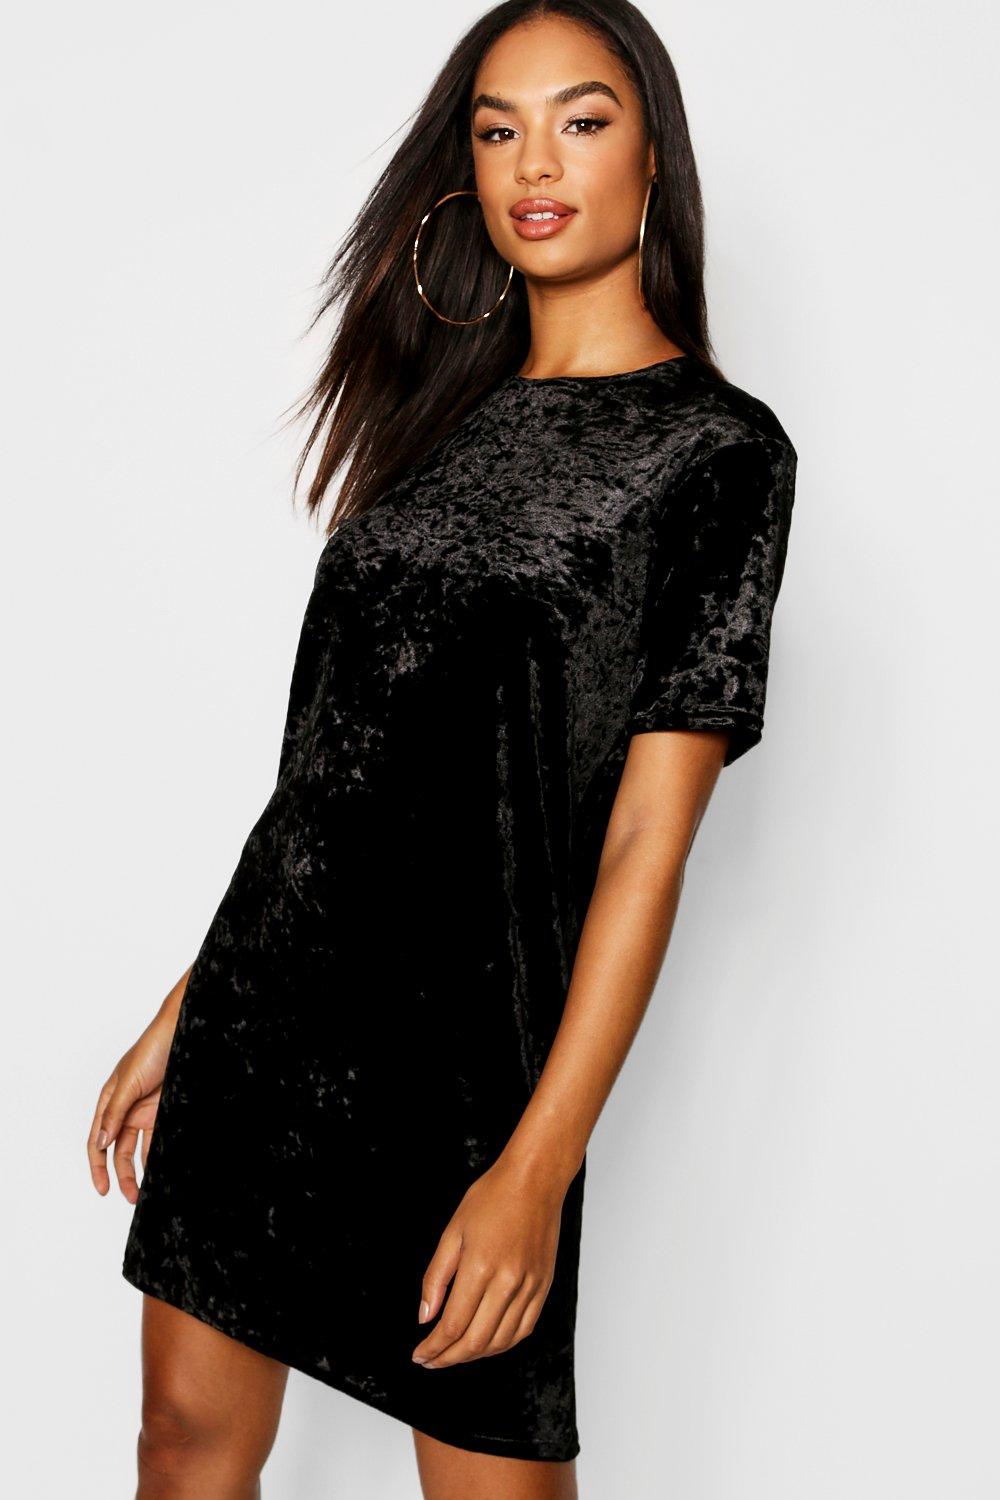 short black dress with slits on the side